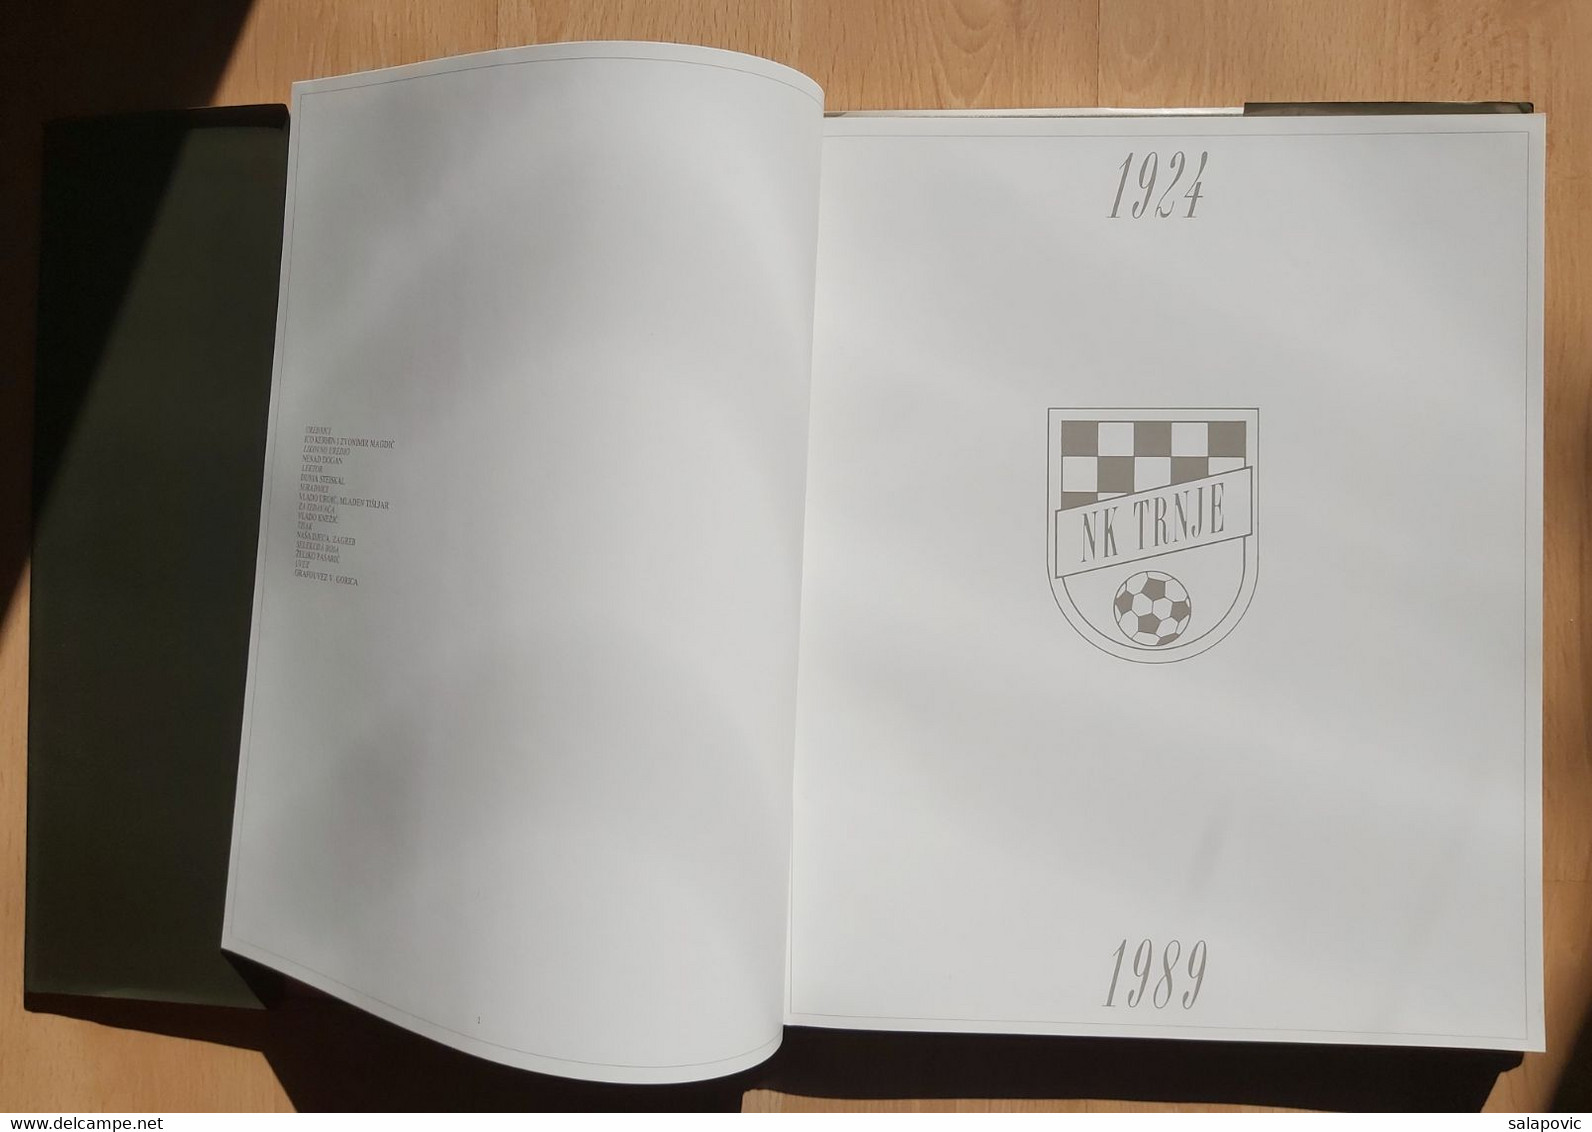 NK Trnje 1924-1989 Football Club, Croatia - Boeken